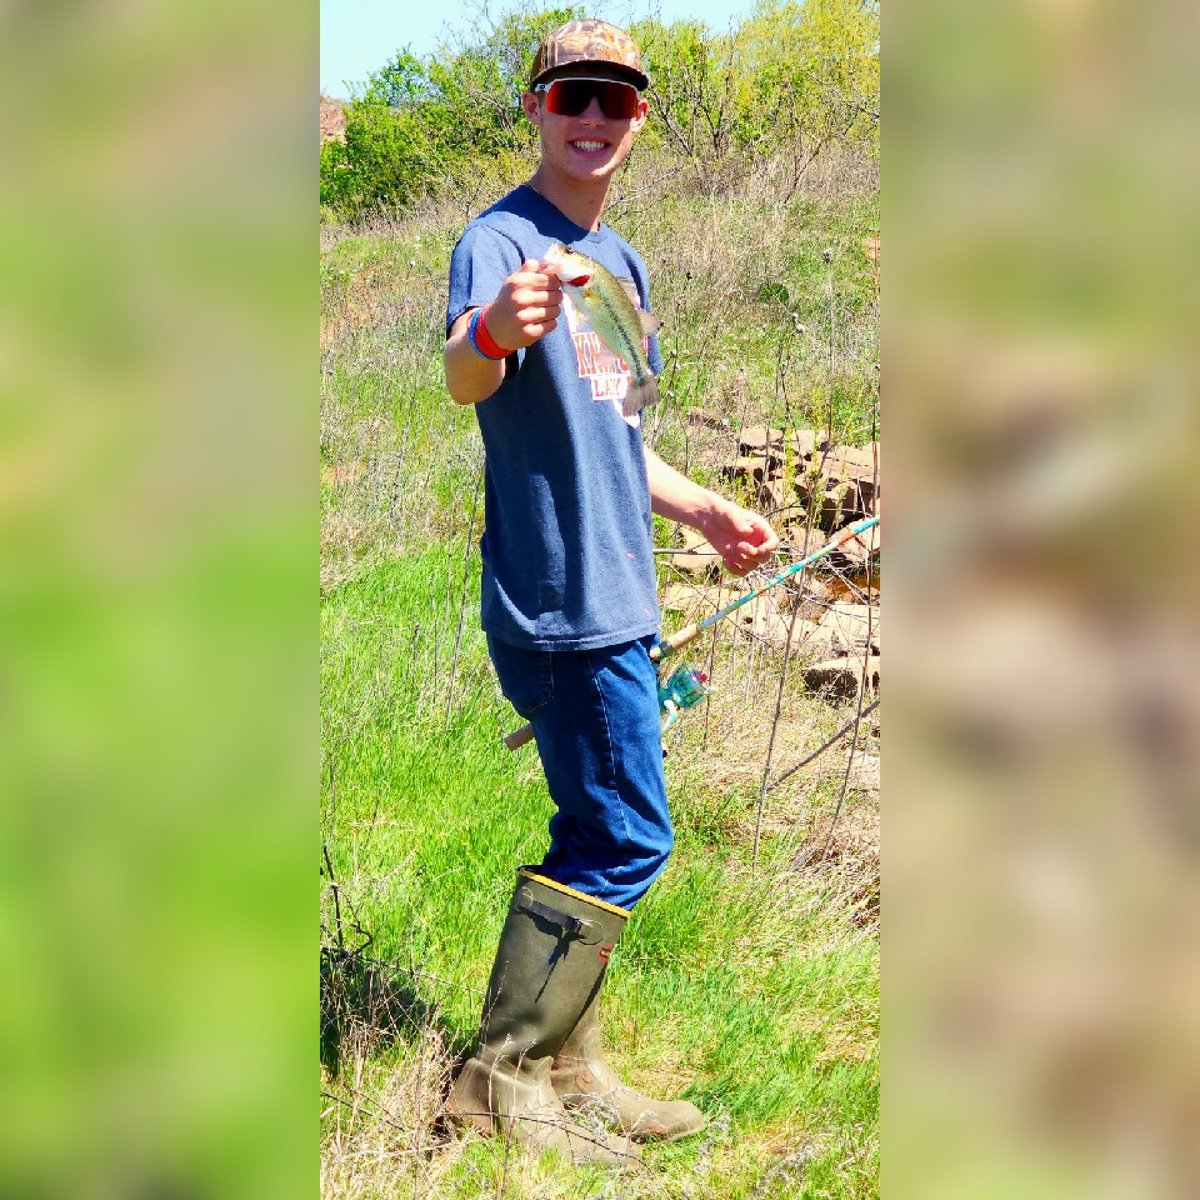 Nothing like a day at the pond with Blake and his crew! Thankfully the 🐍🐍🐍 stayed home.
🪨 
🐟
🌳
#OklahomaFishing #FishingLife #CatchAndRelease #BigBass #FishingDaily #OutdoorAdventures #FishOn #AnglerLife #FishingIsLife #HuntingSeason #BassFishing #TroutFishing #Catfishing